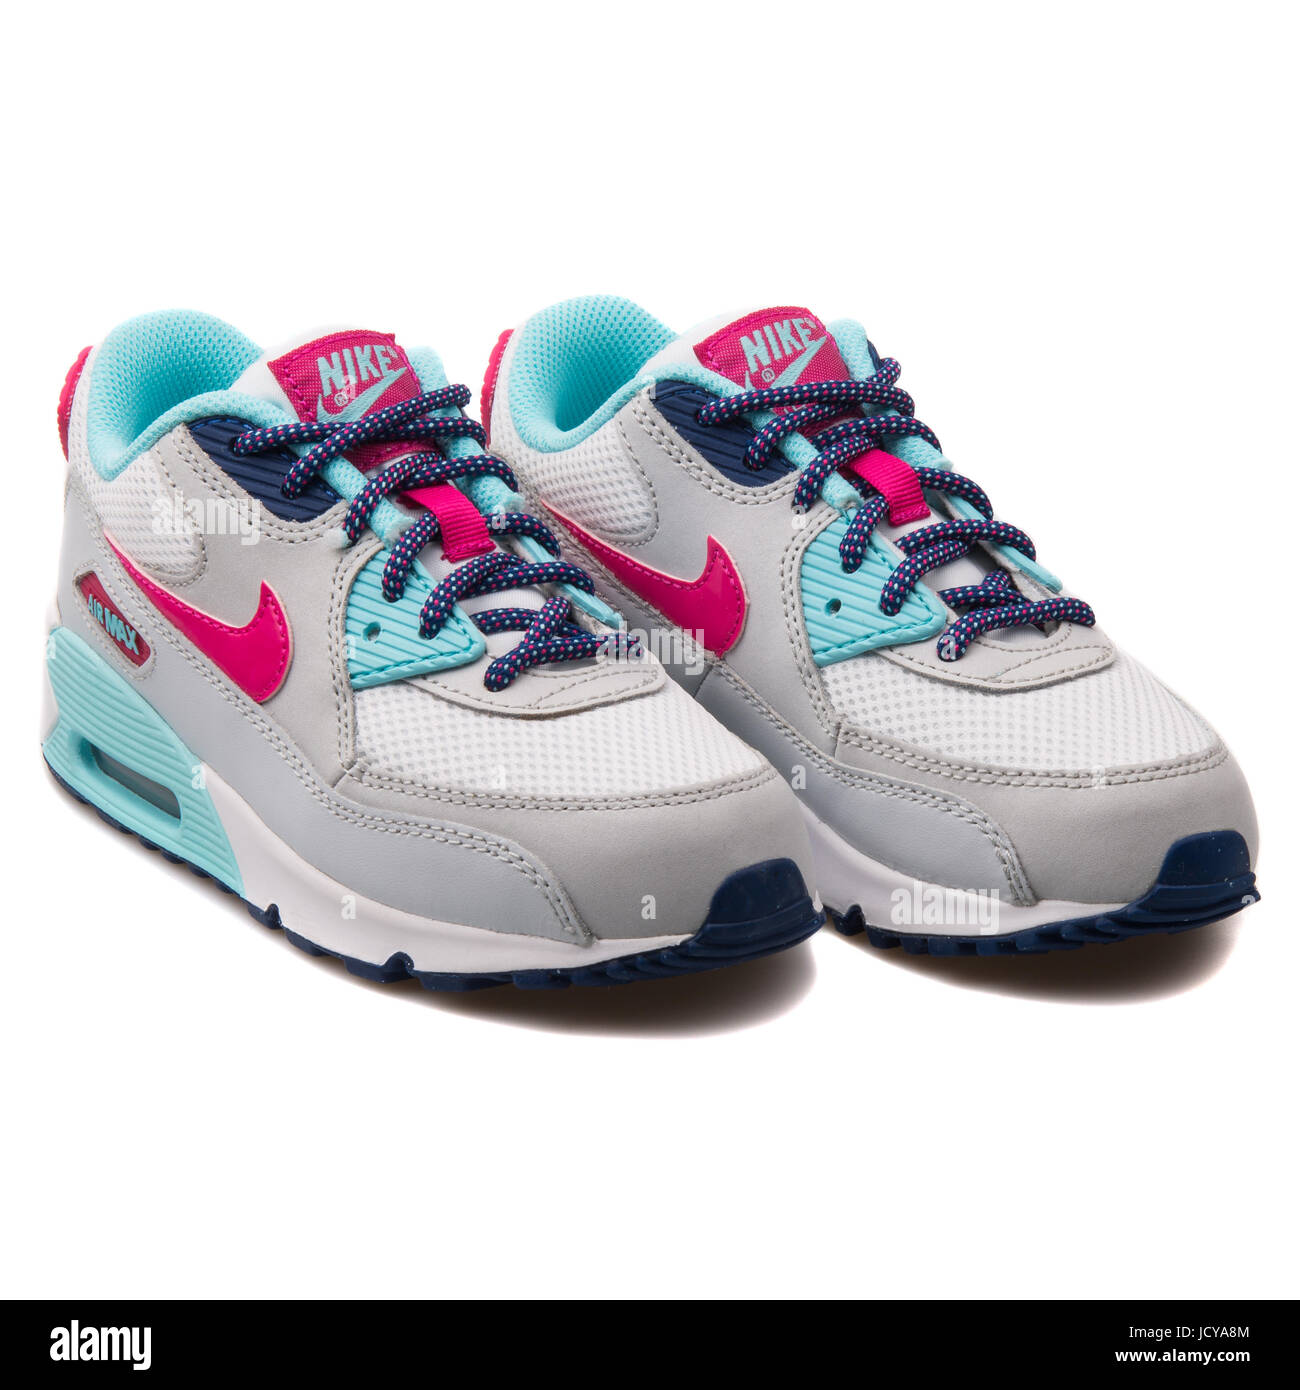 Nike Air Max 90 Mesh (PS) weiß, grau, Pink Türkis Kinder Laufschuhe - Stockfotografie - Alamy